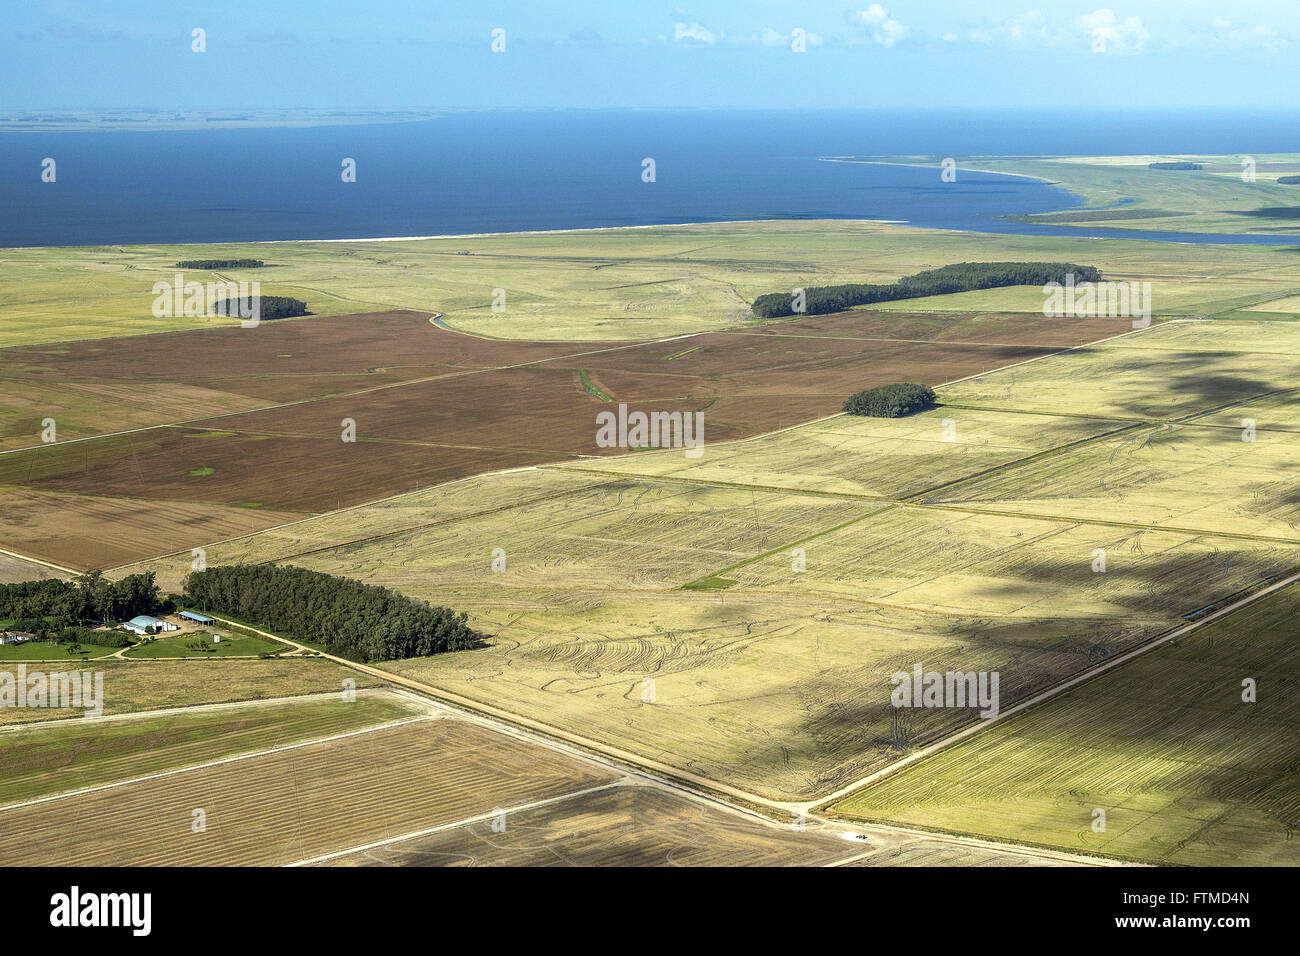 Vista Aerea de Plantacao de Arroz e Lagoa Mirim Stockfoto